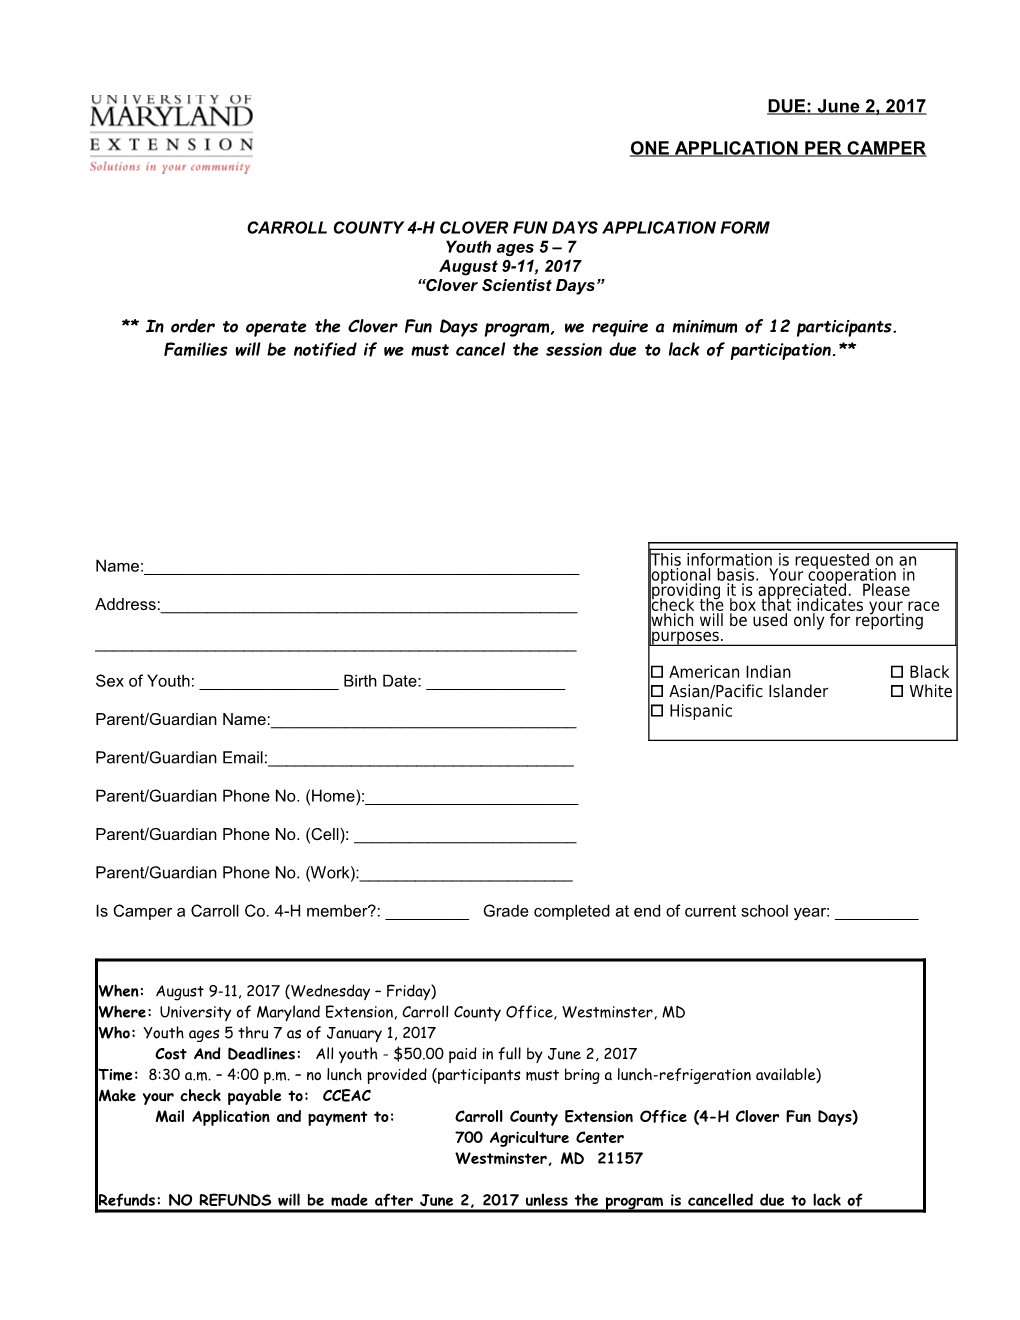 Carroll County 4-H Clover Fun Days Application Form